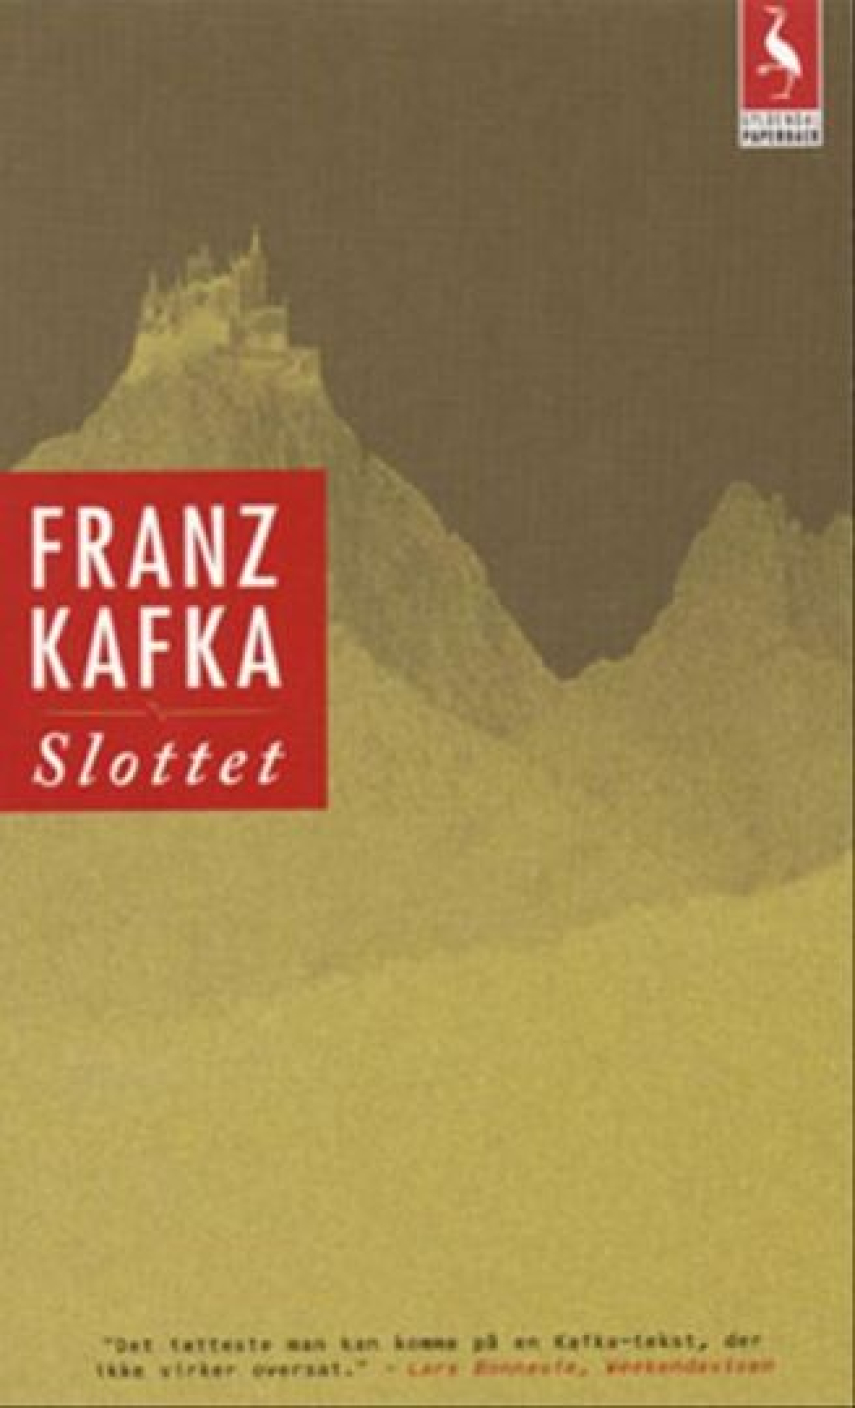 Franz Kafka: Slottet (Ved Villy Sørensen)